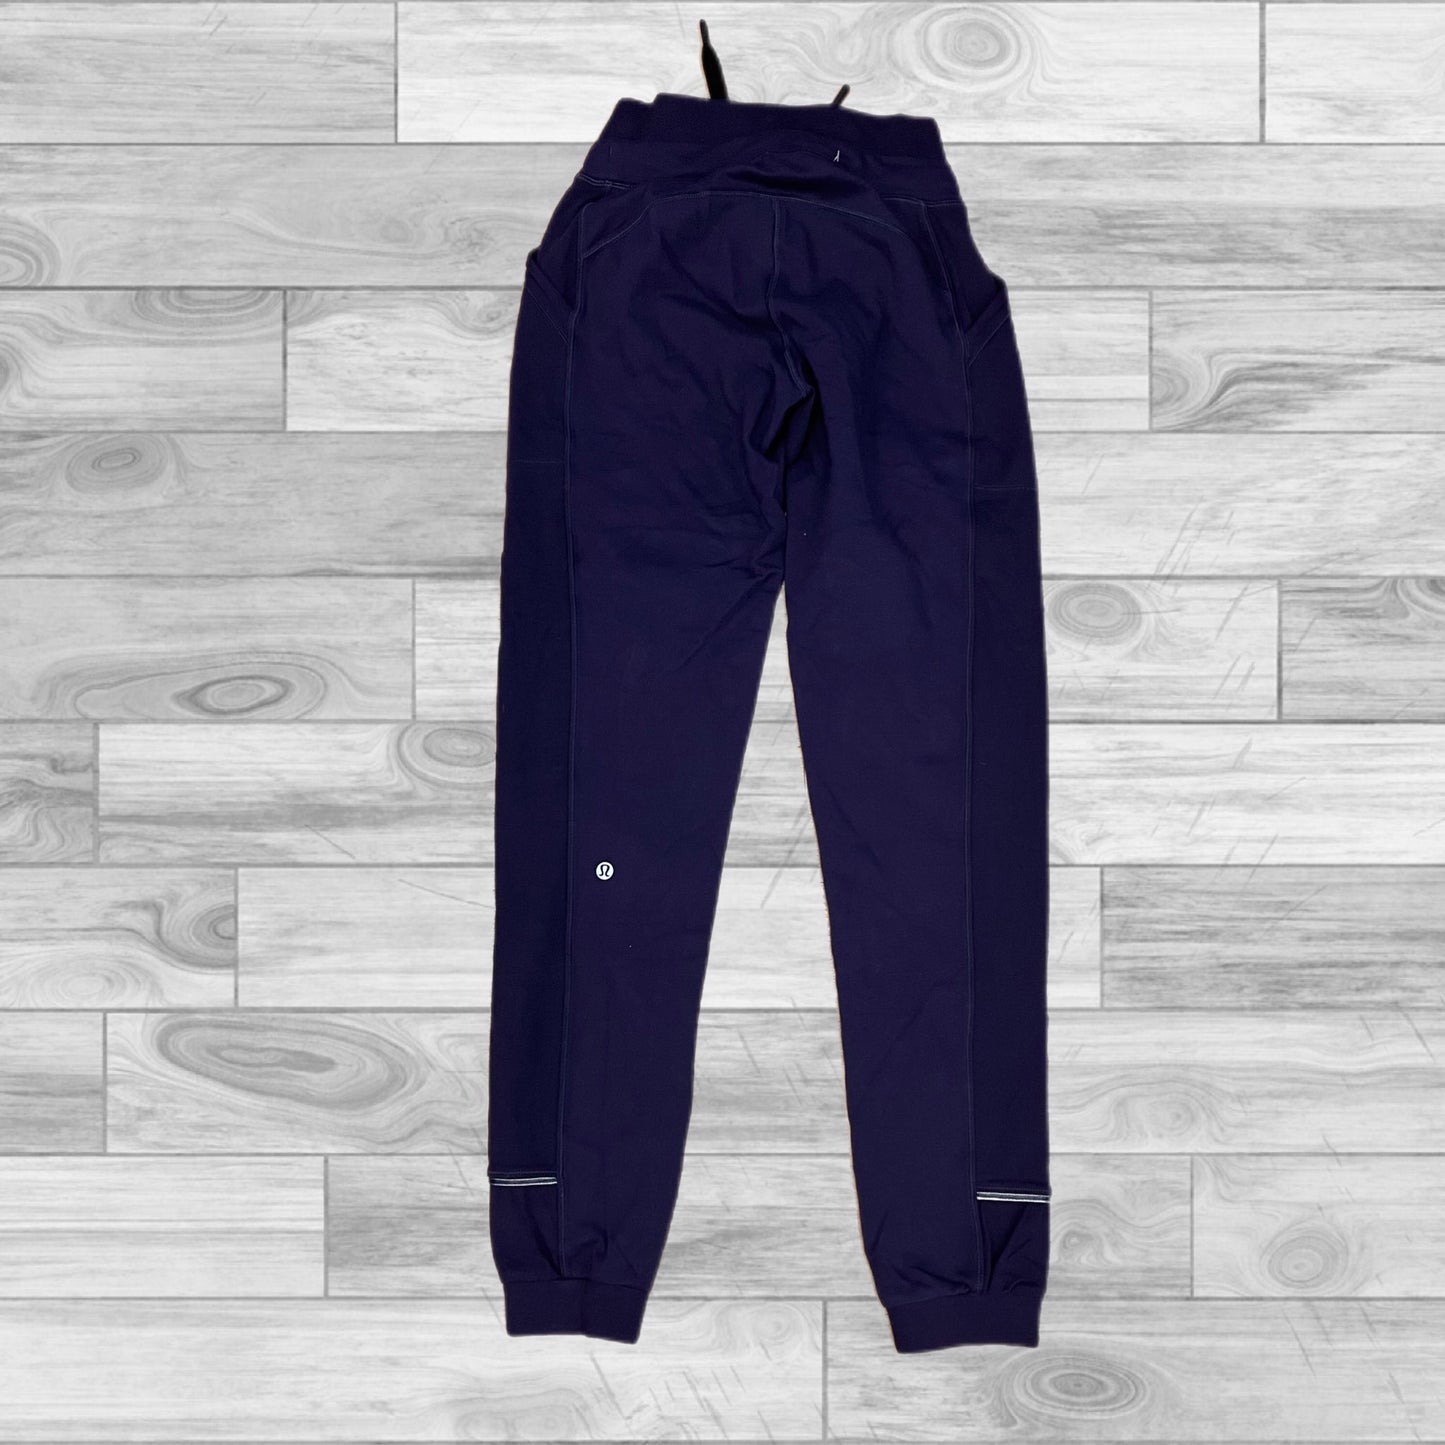 Purple Athletic Pants Lululemon, Size 2